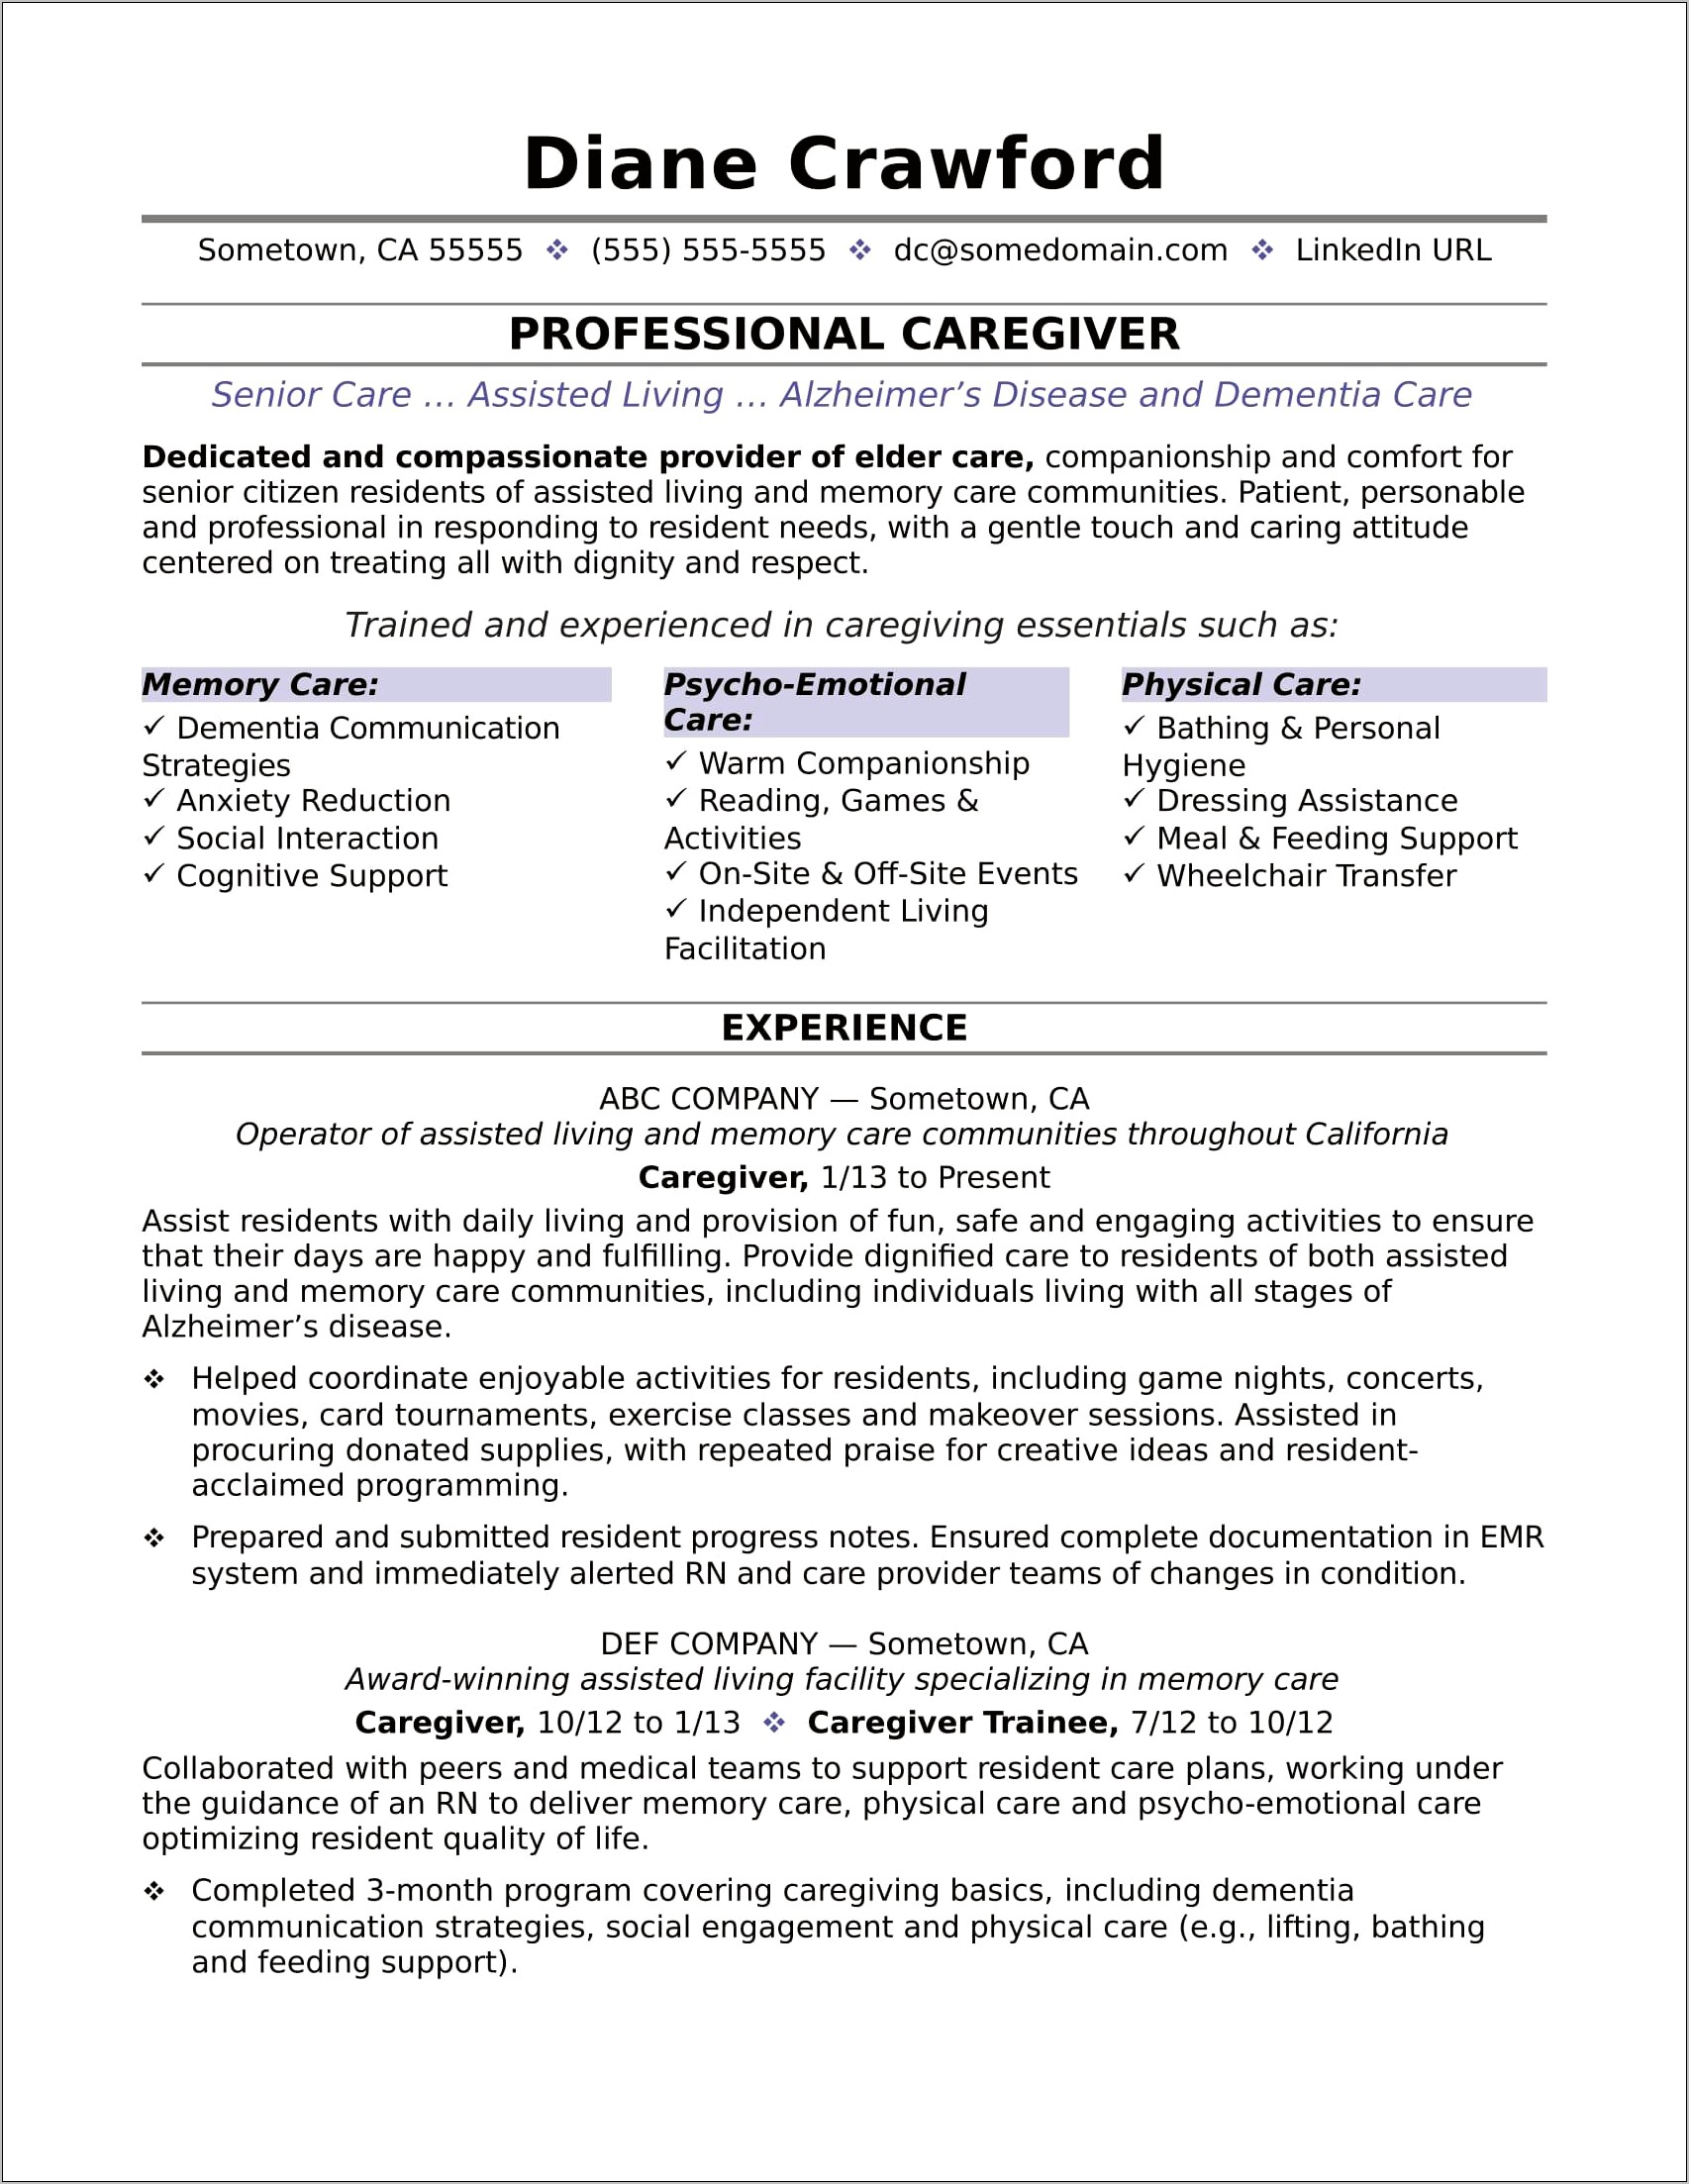 Caregiver Job Duties And Responsibilities Resume